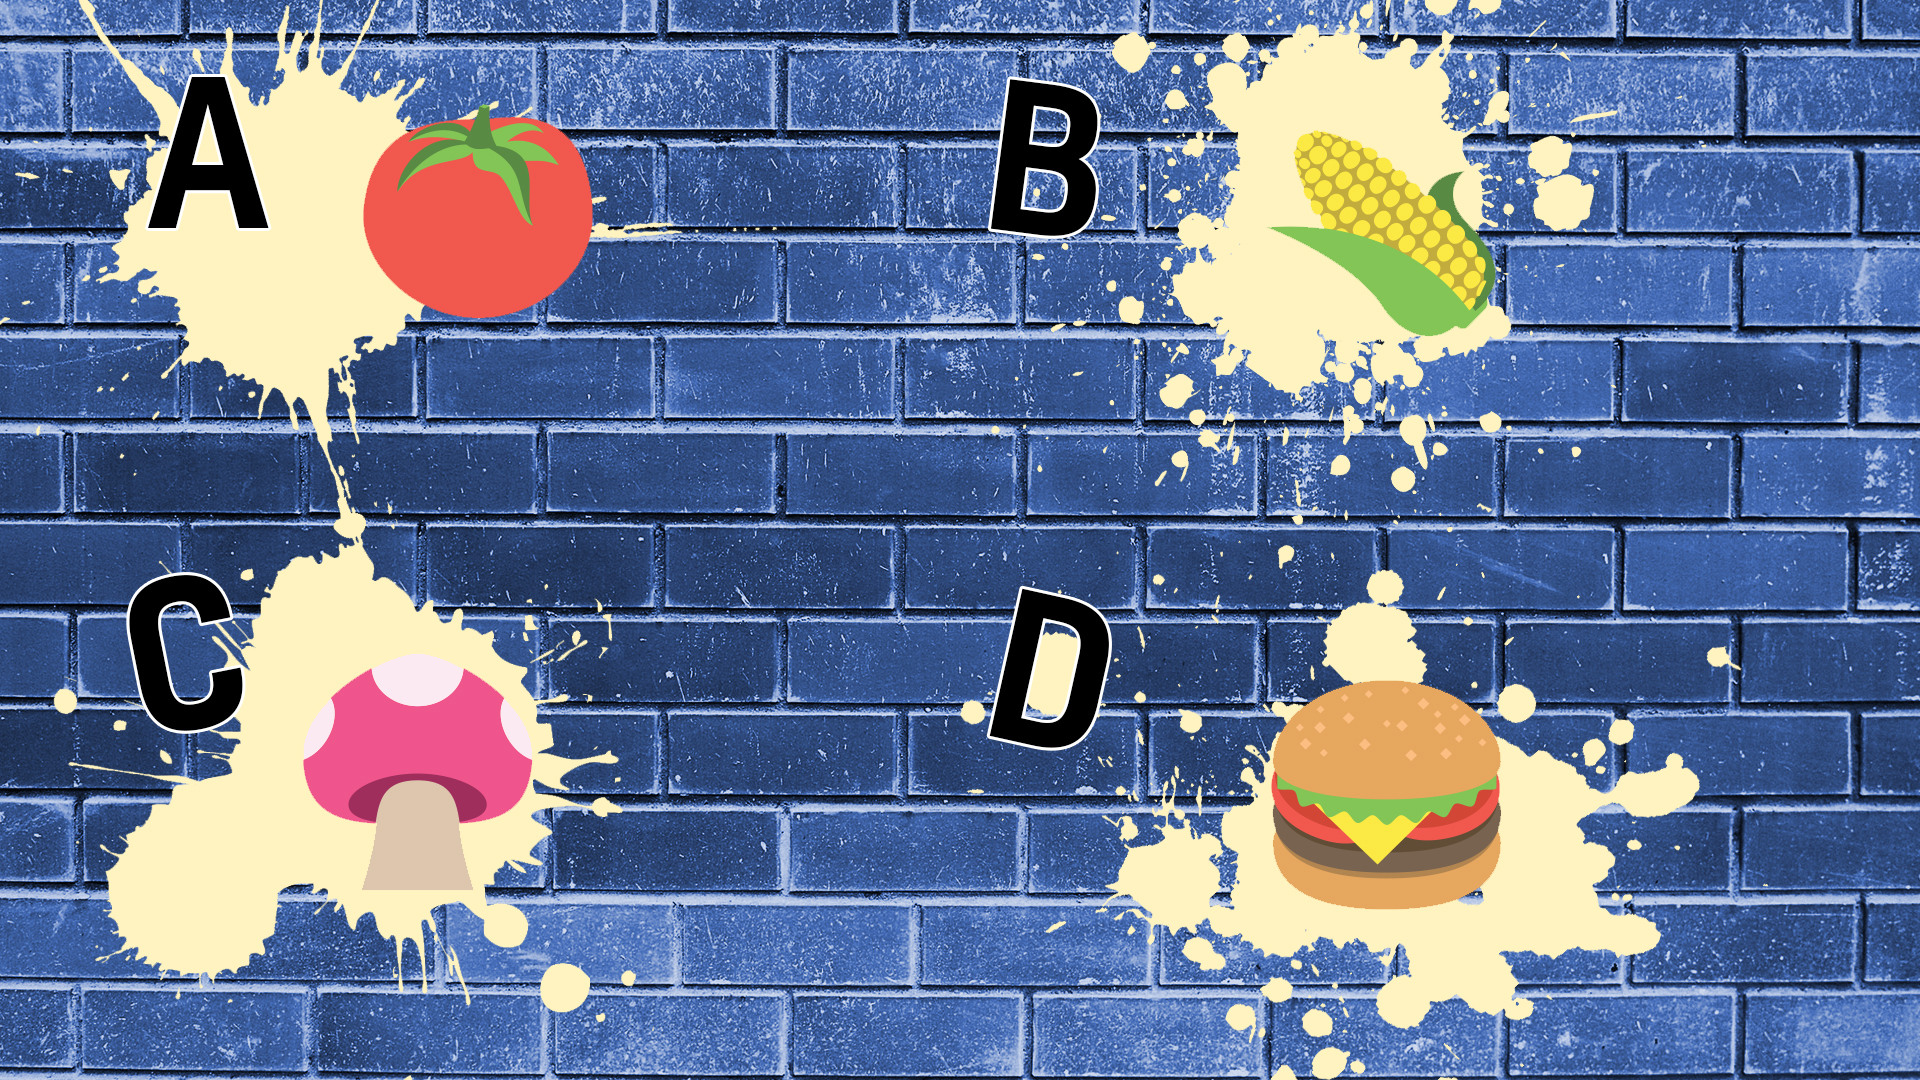 A selection of emojis: tomato, sweetcorn, mushroom, burger